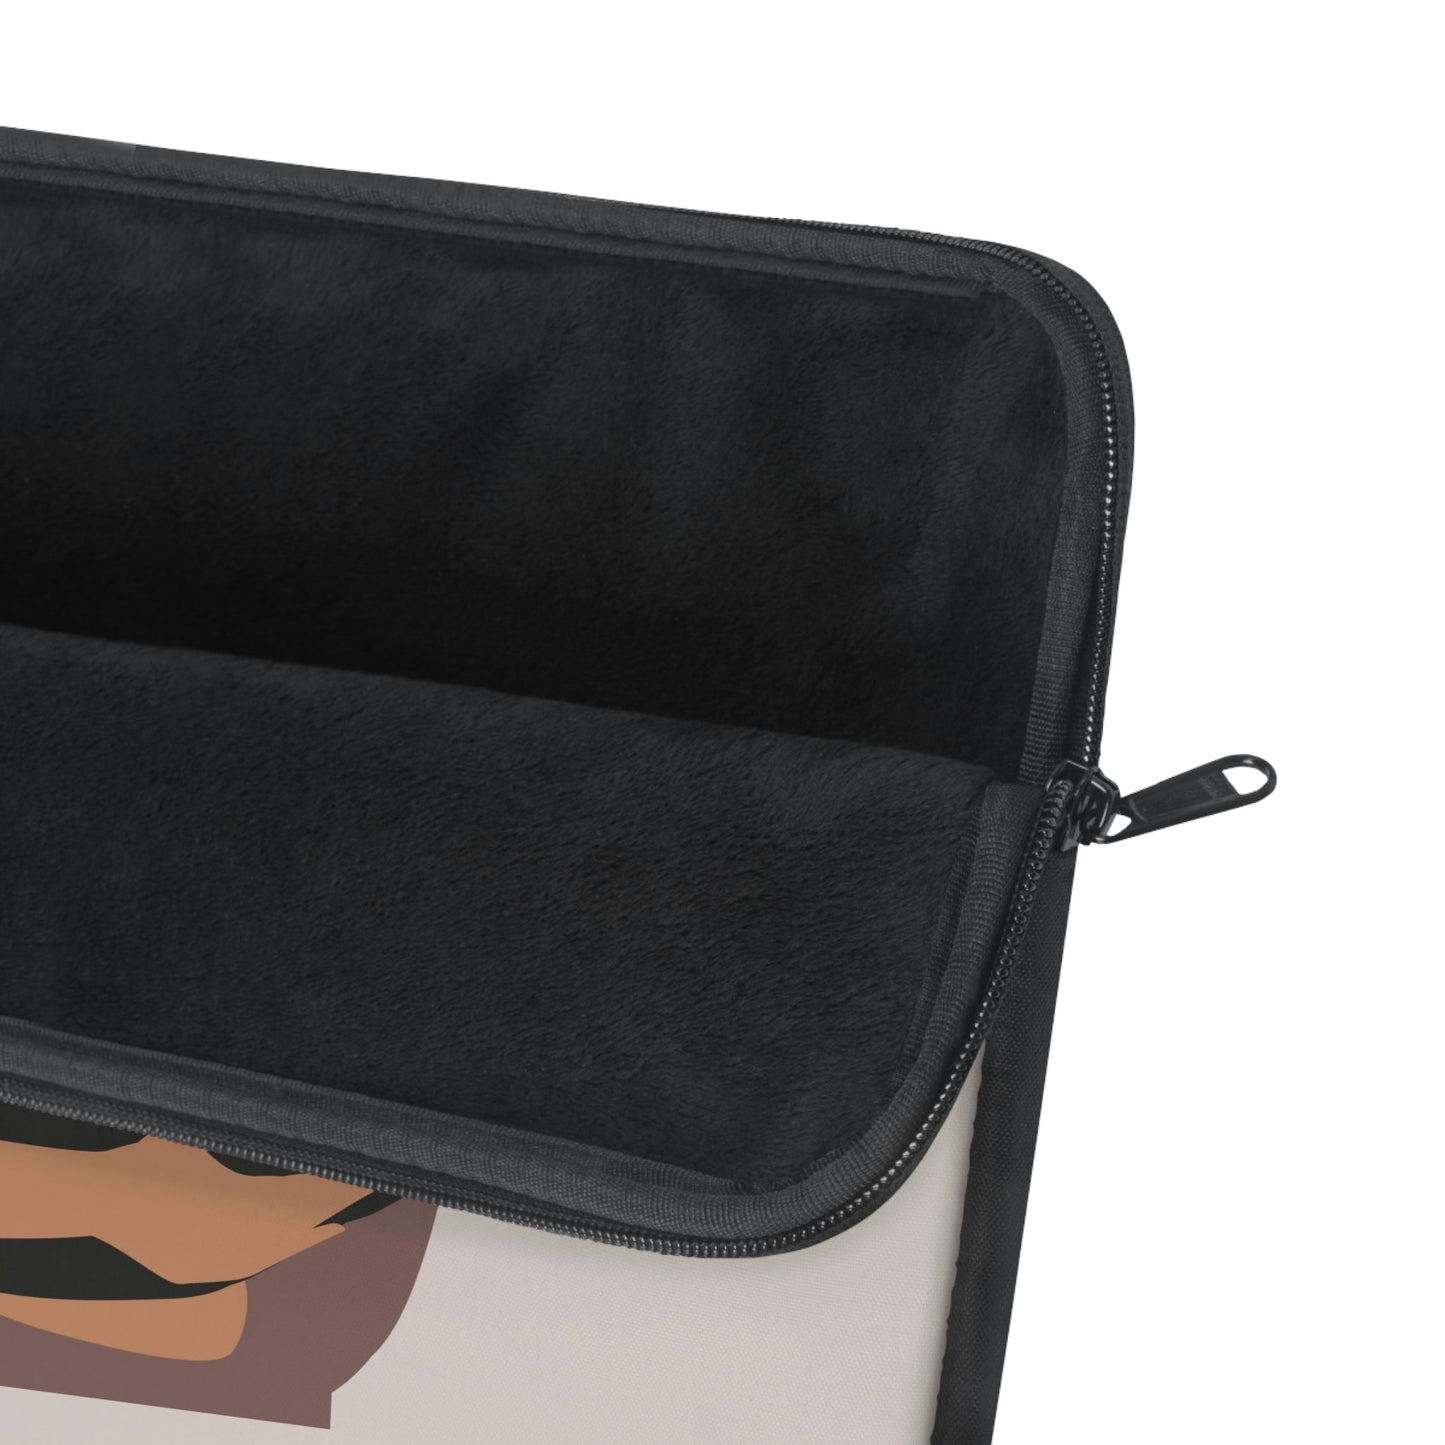 Woman with Black Cat Mininal Aesthetic Art Laptop Sleeve Ichaku [Perfect Gifts Selection]